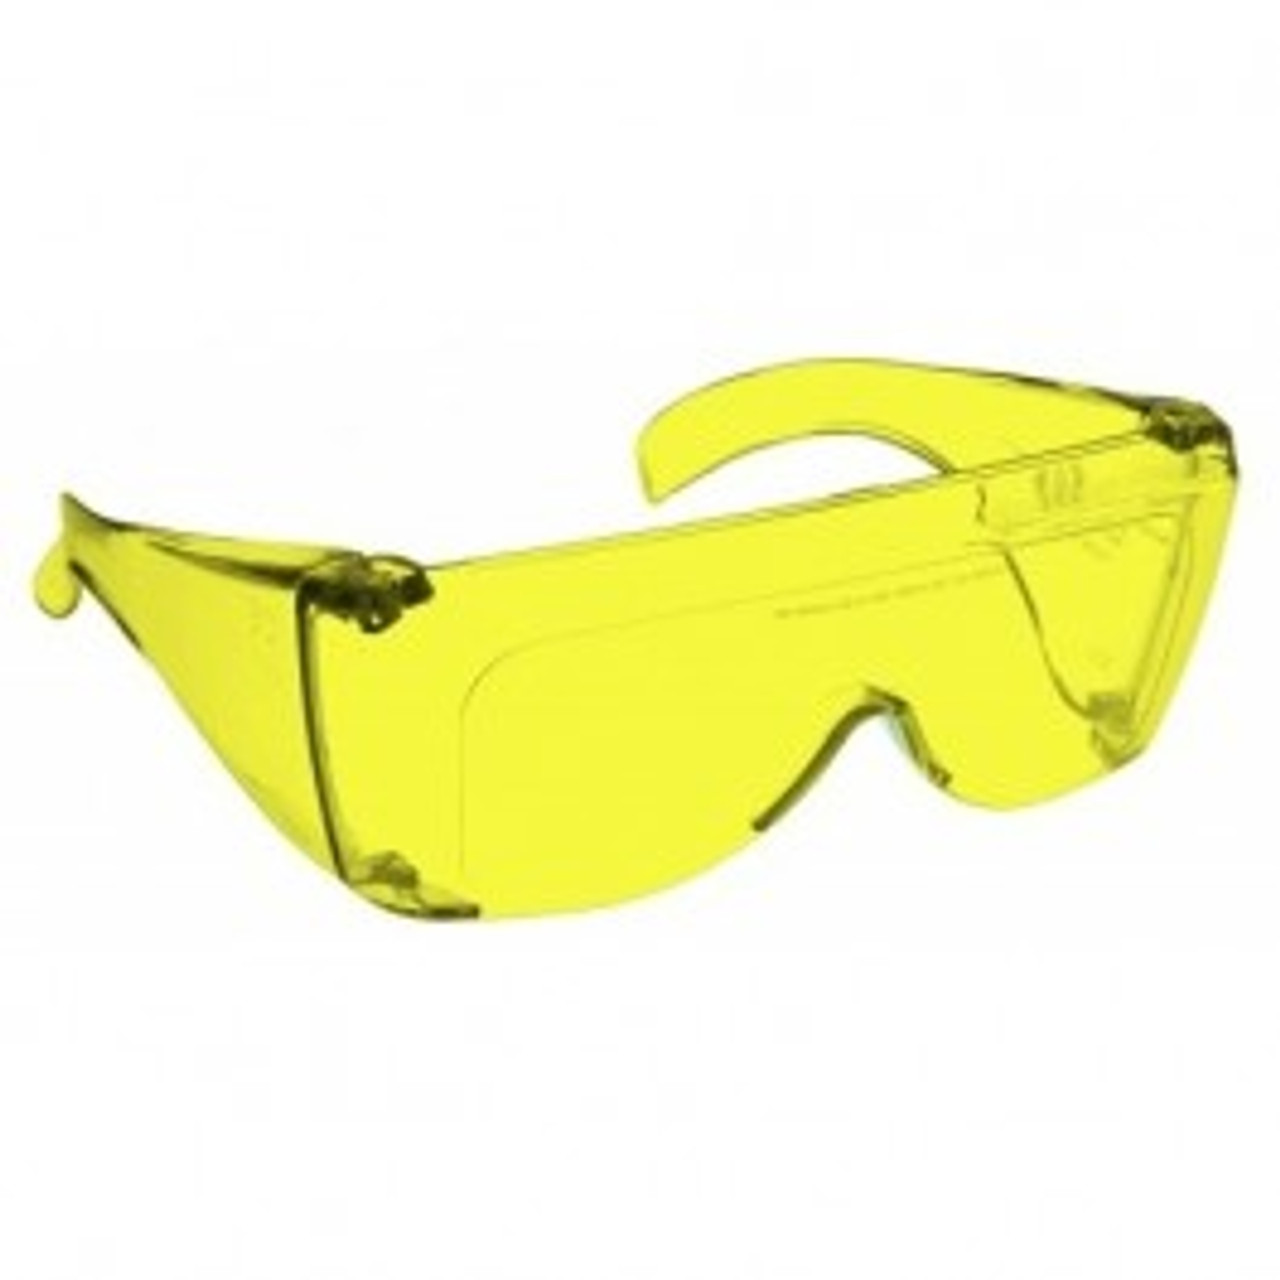 NoIR 87% Yellow Fitover Sunglasses Large L50